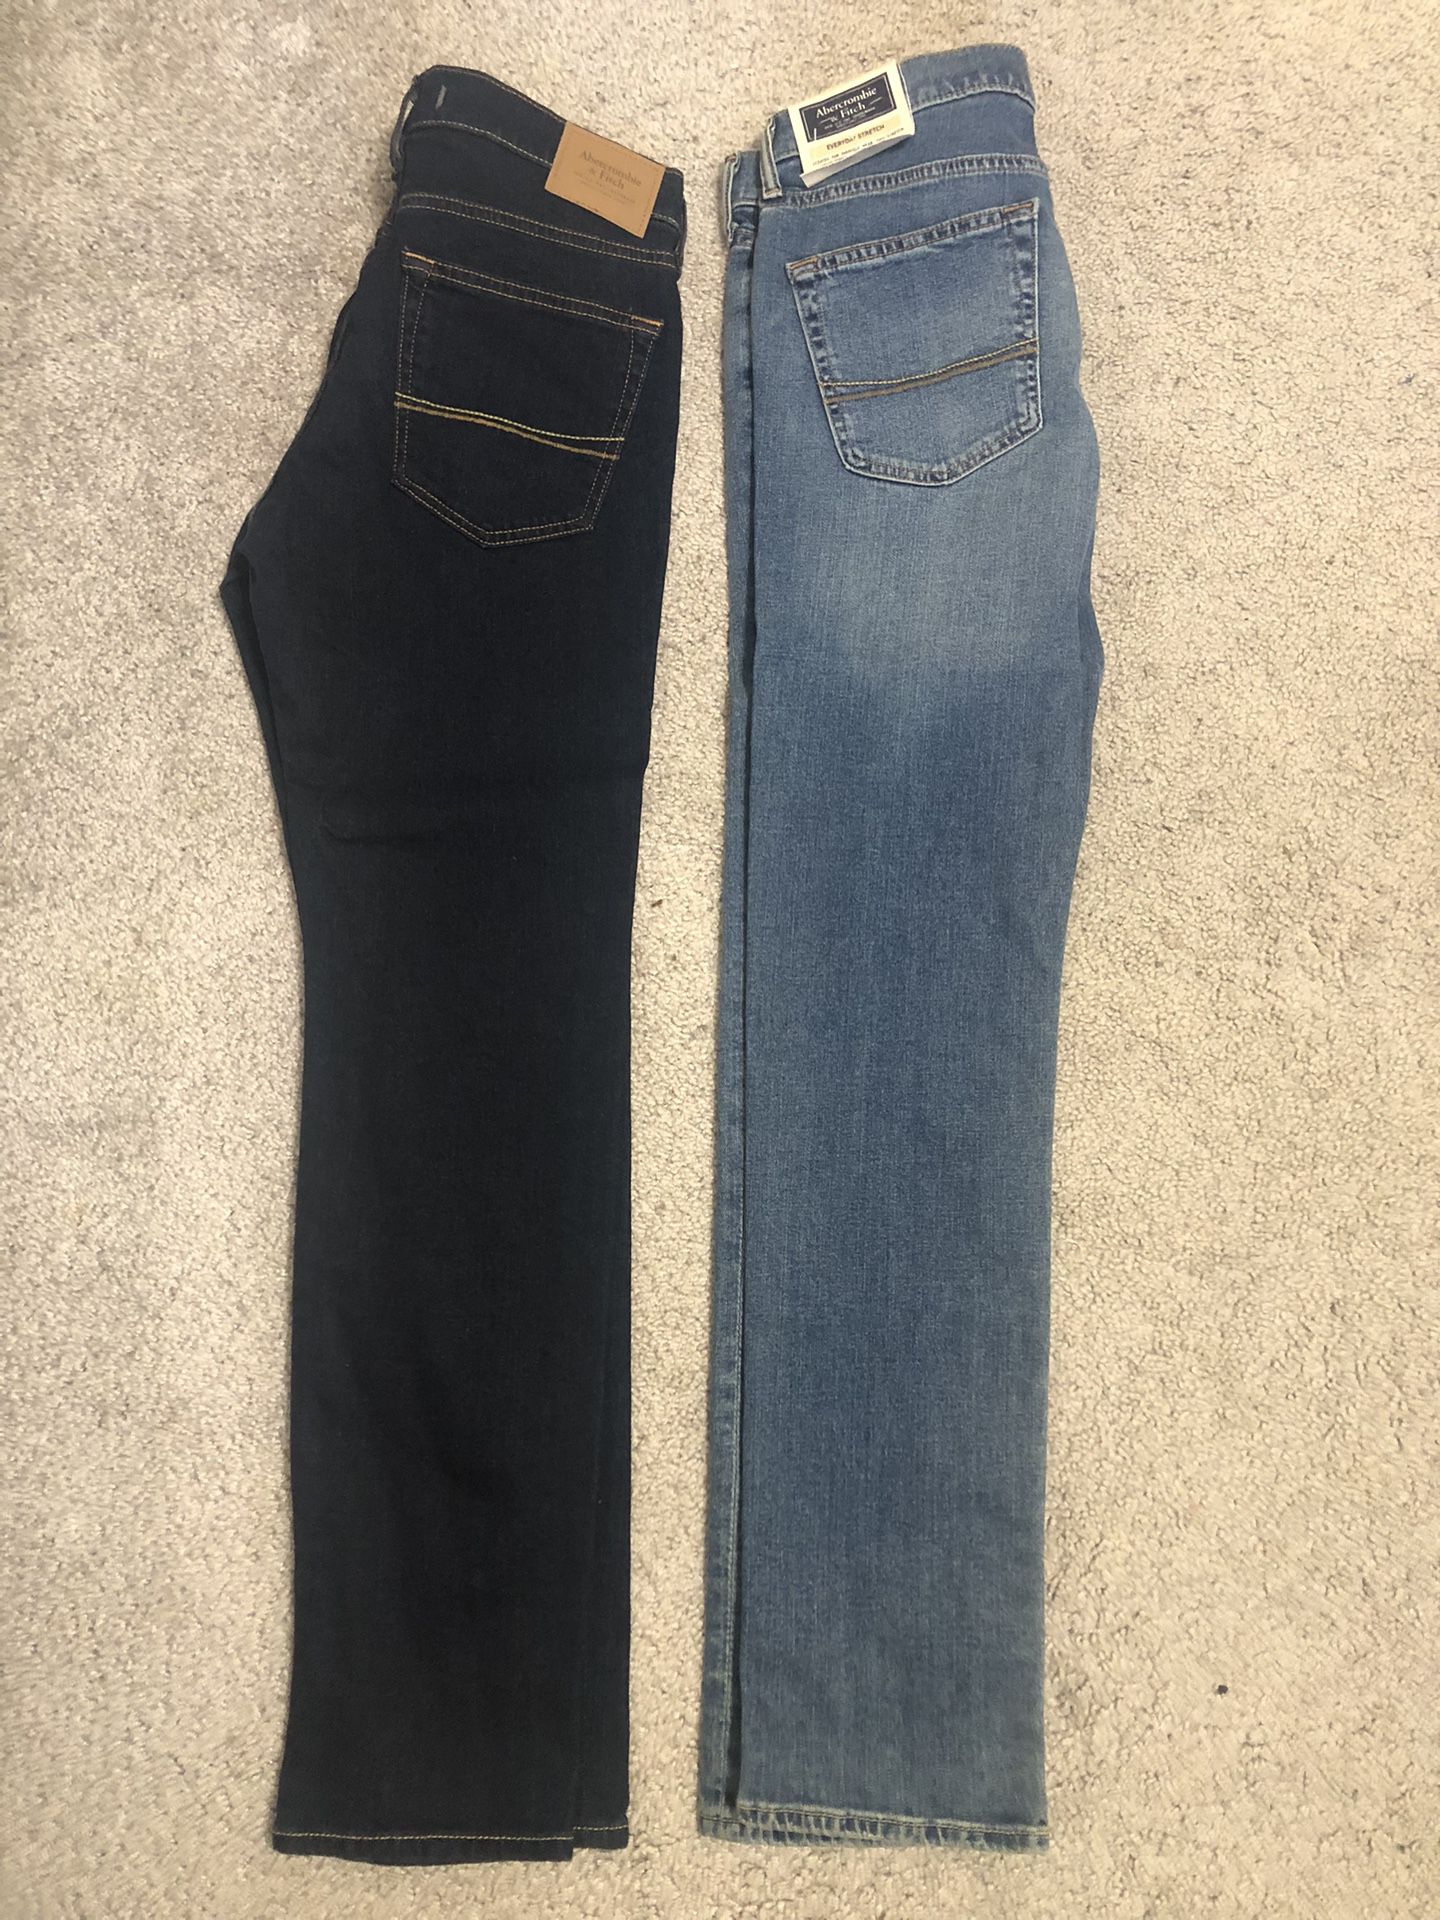 Abercrombie & Fitch Men’s Jeans 